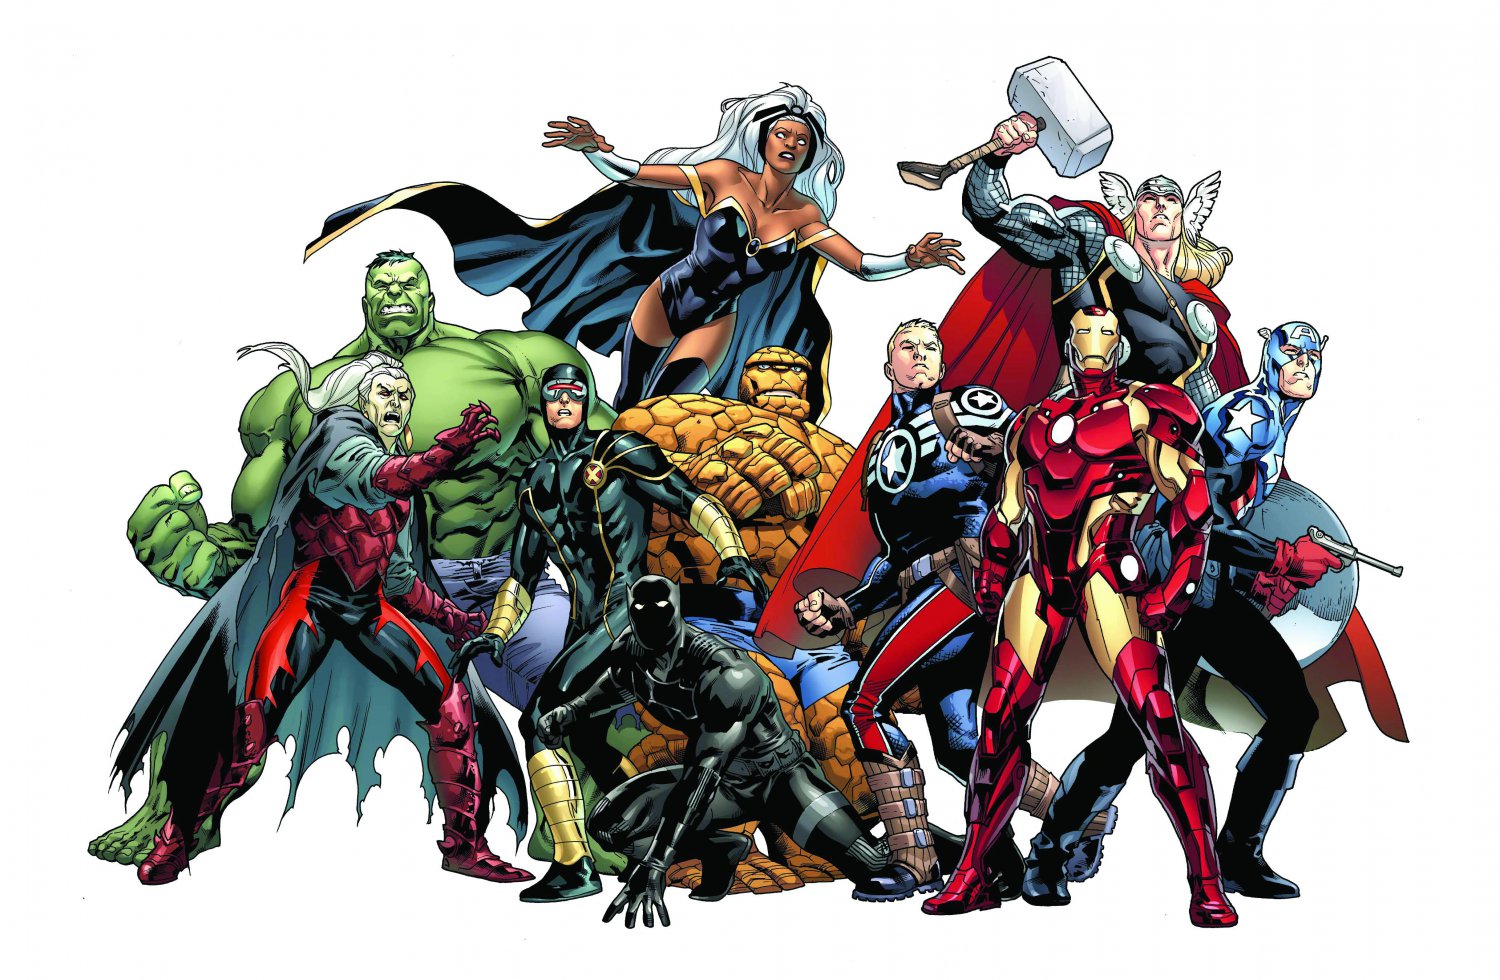 Marvel supereroes - 31.36" x 20.71" - Cross Stitch Pattern Pdf E232